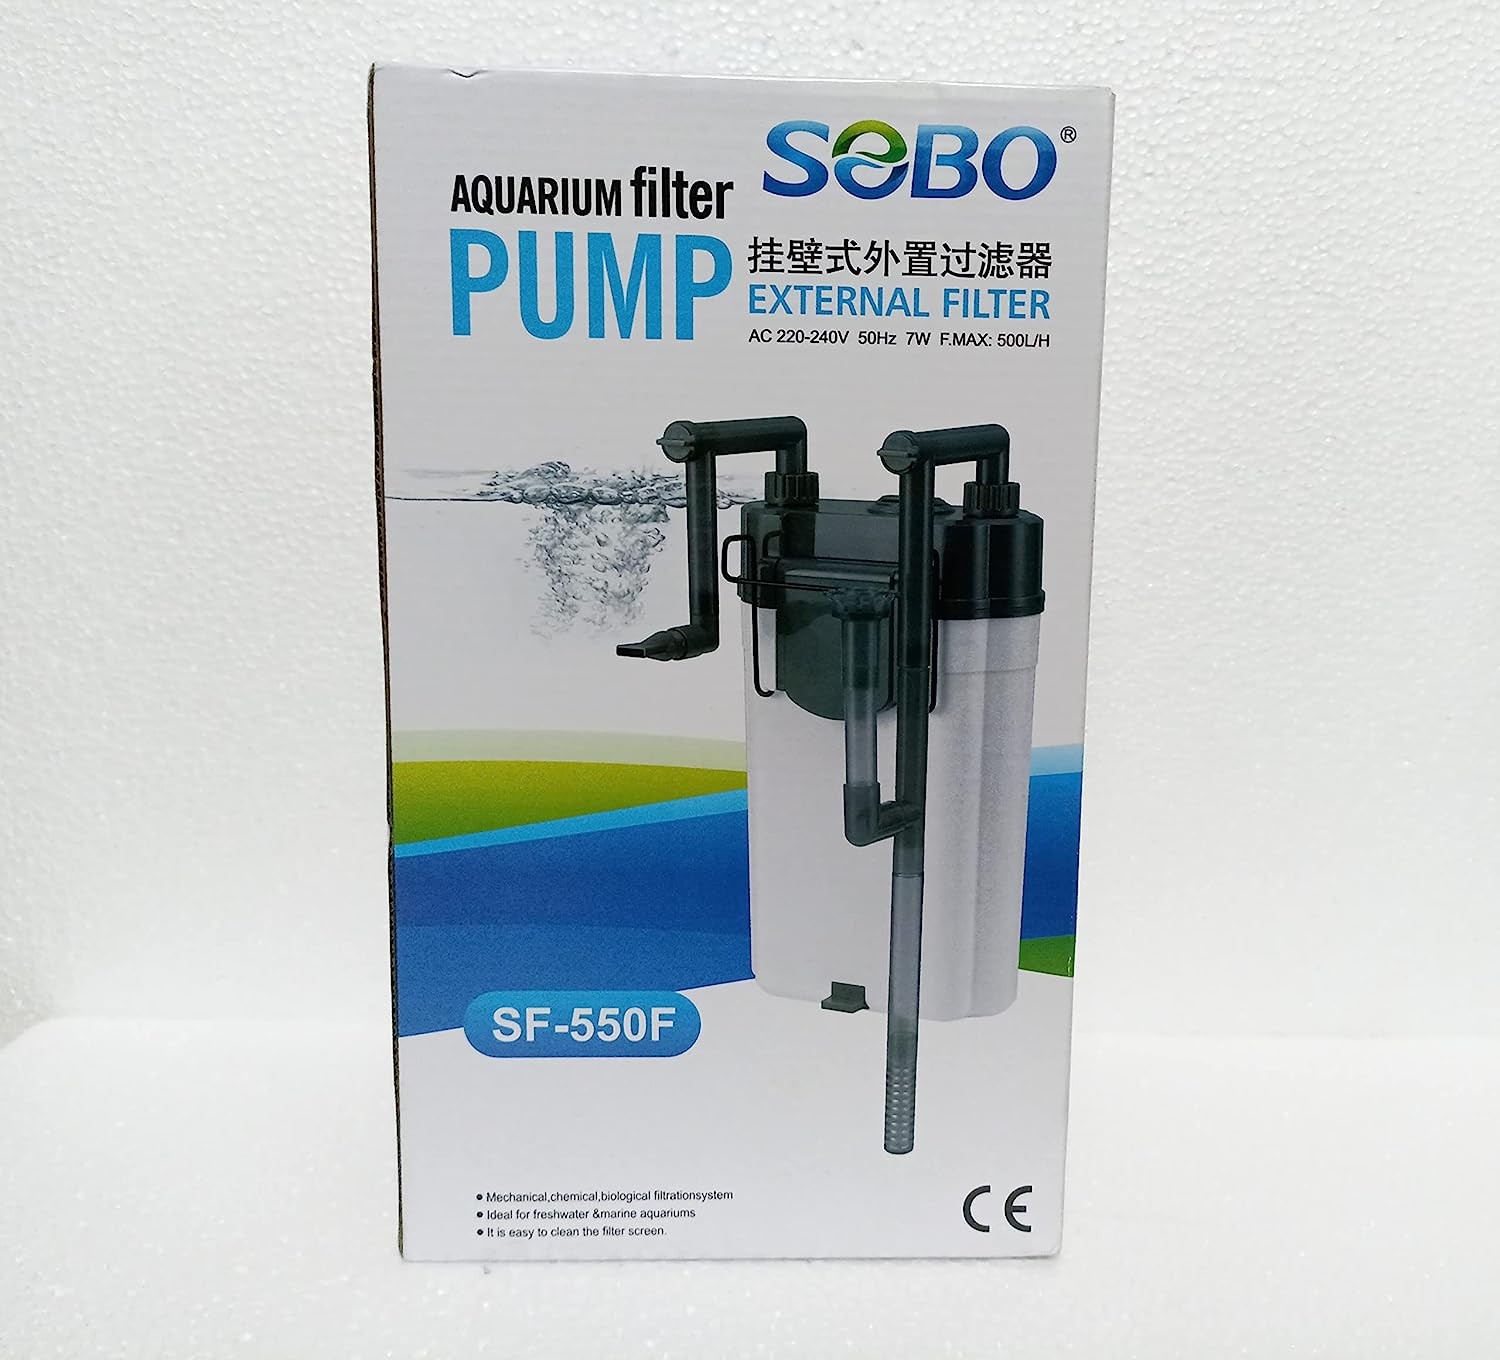 SOBO Aquarium Filter Pump External Filter SF-550F (AC 220-240V 50Hz 7W F.MAX: 500 L/H) with Surface Skimmer